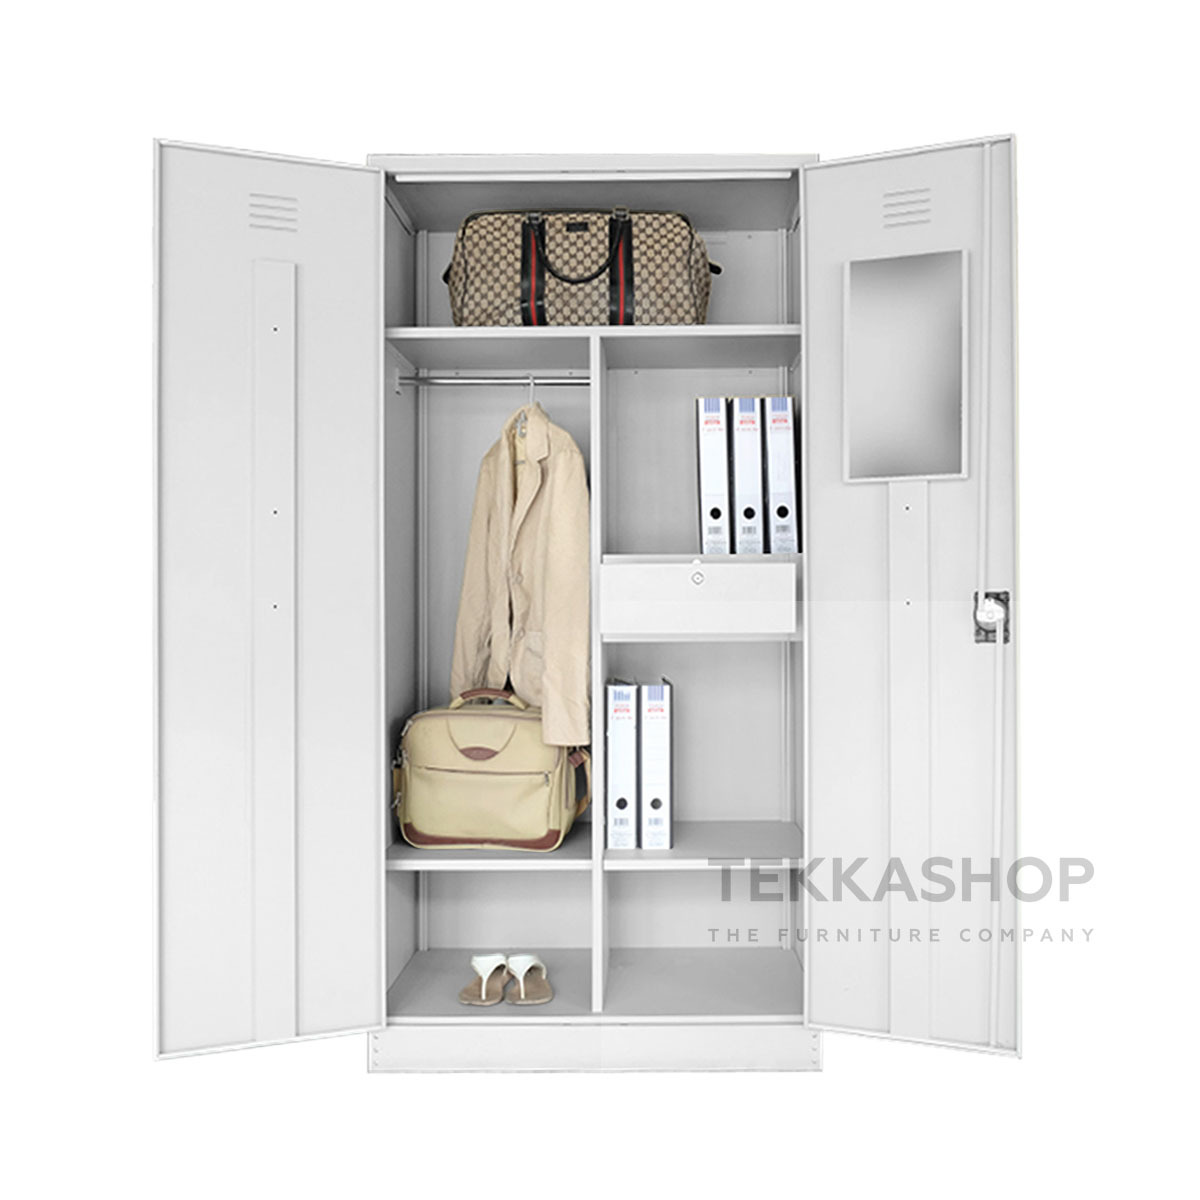 Tekkashop Cssfc5gre Full Height Metal Wardrobe Cabinet Storage